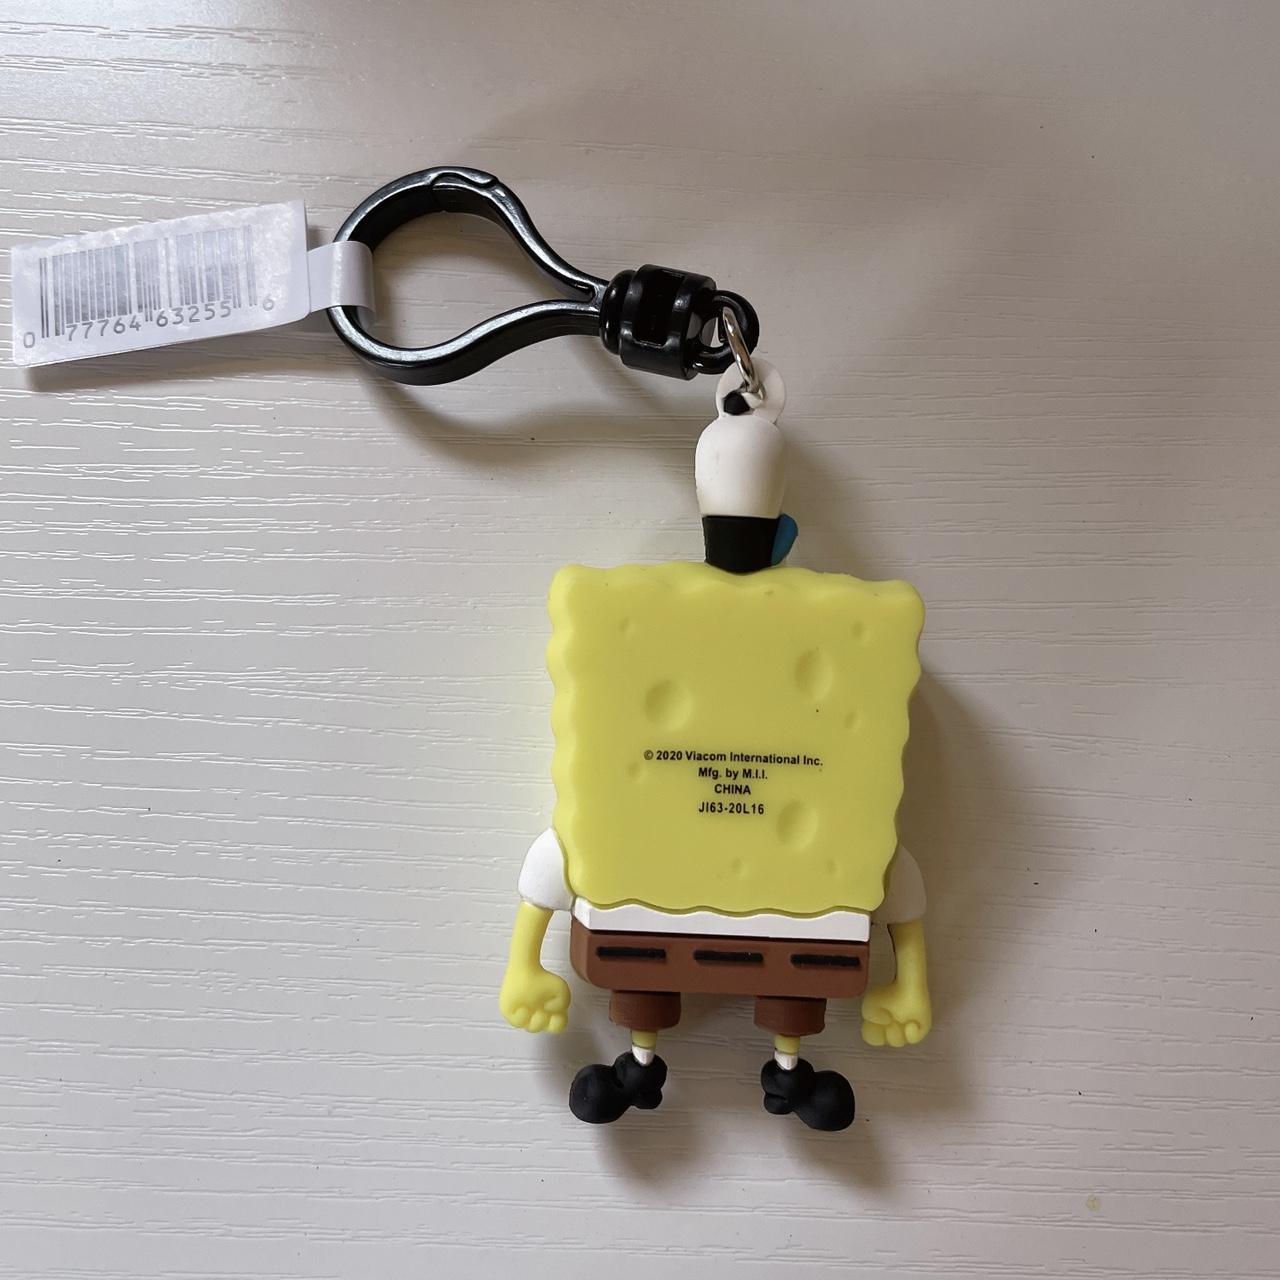 ☆Astronaut keychain/bag charm ☆Free shipping if - Depop